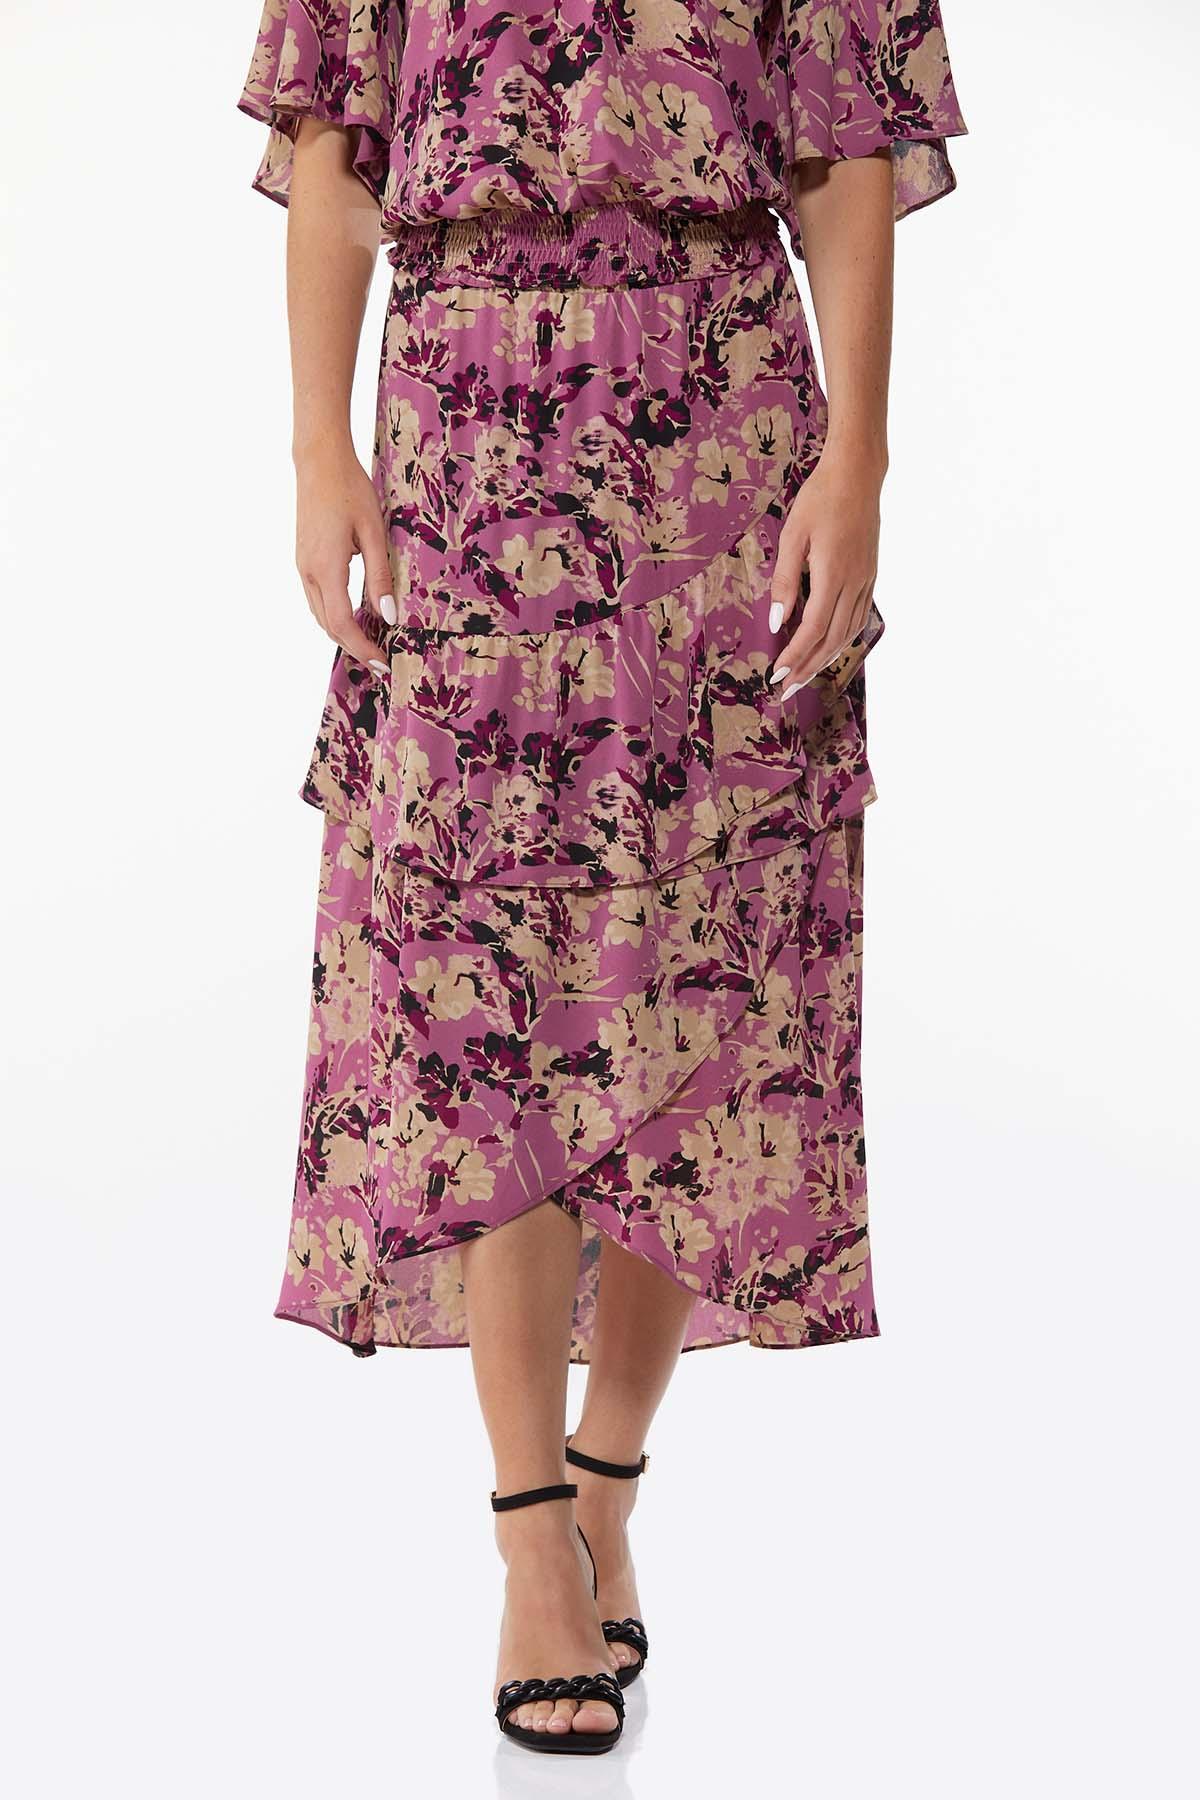 Grape Floral Skirt